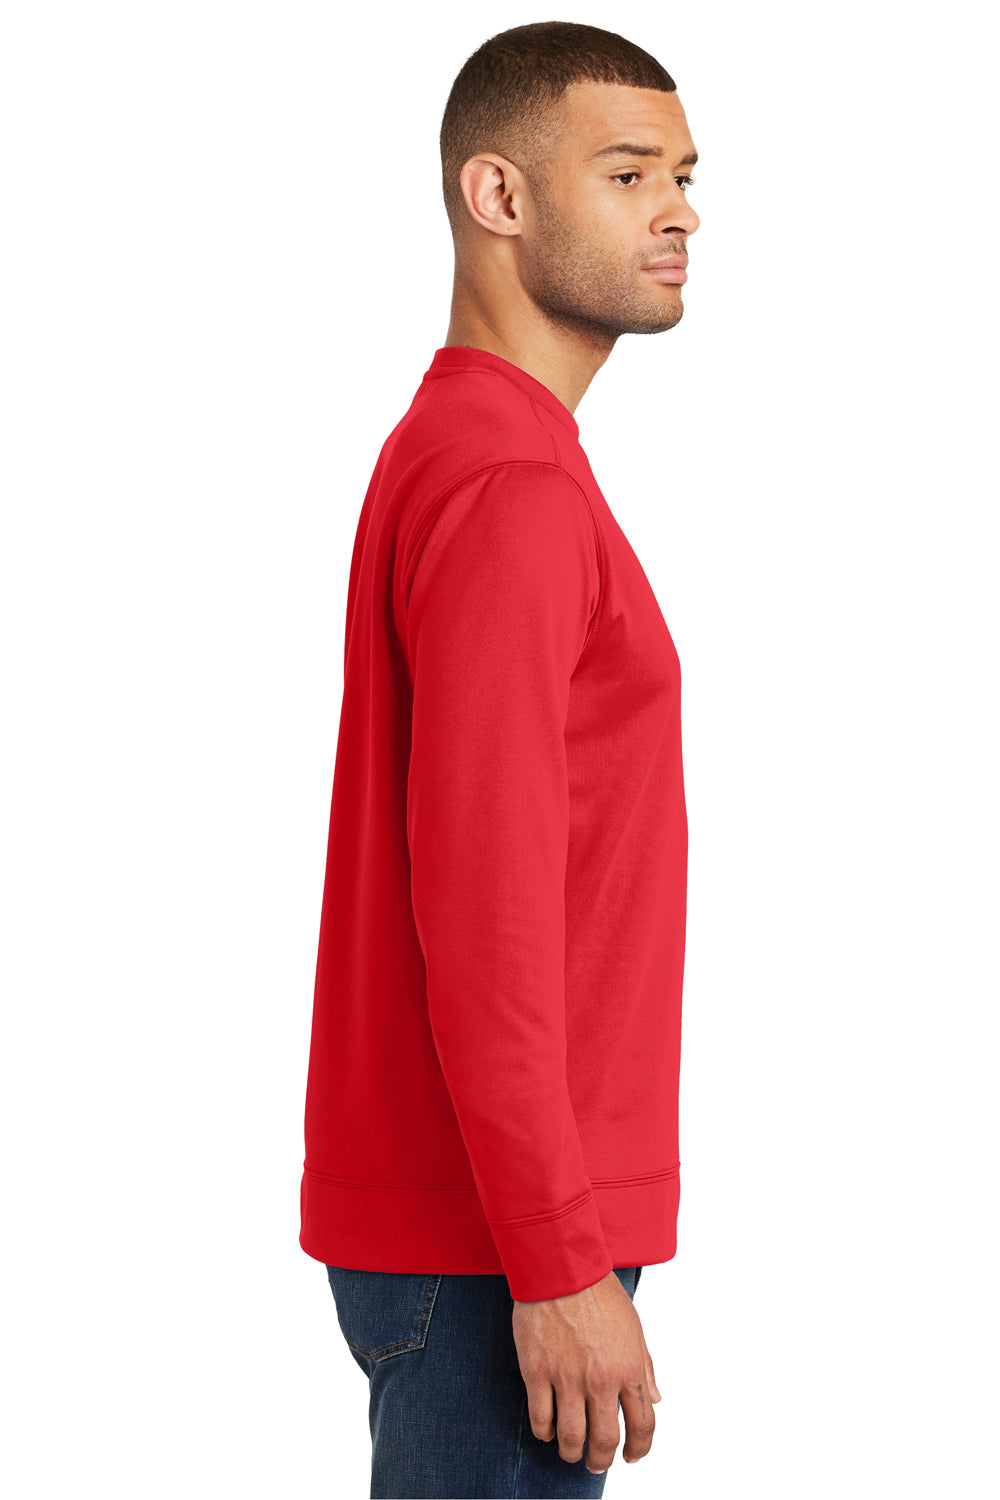 Port & Company PC590 Mens Dry Zone Performance Moisture Wicking Fleece Crewneck Sweatshirt Red Side